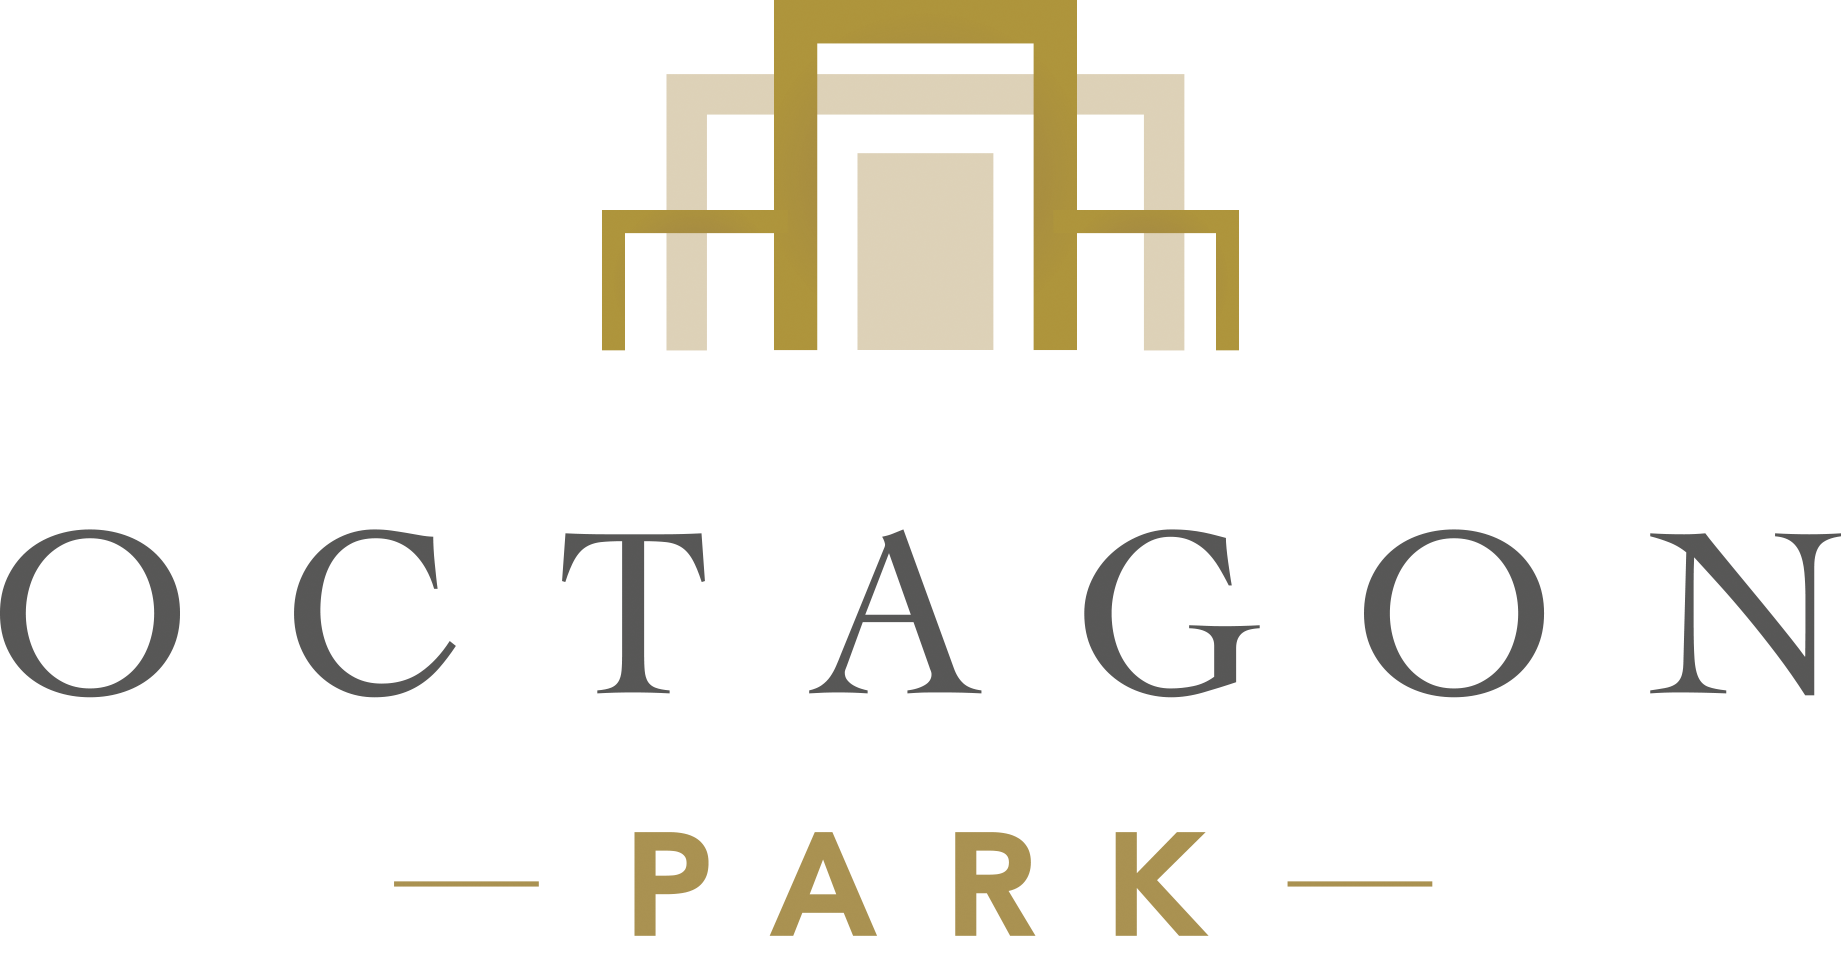 Octagon Park